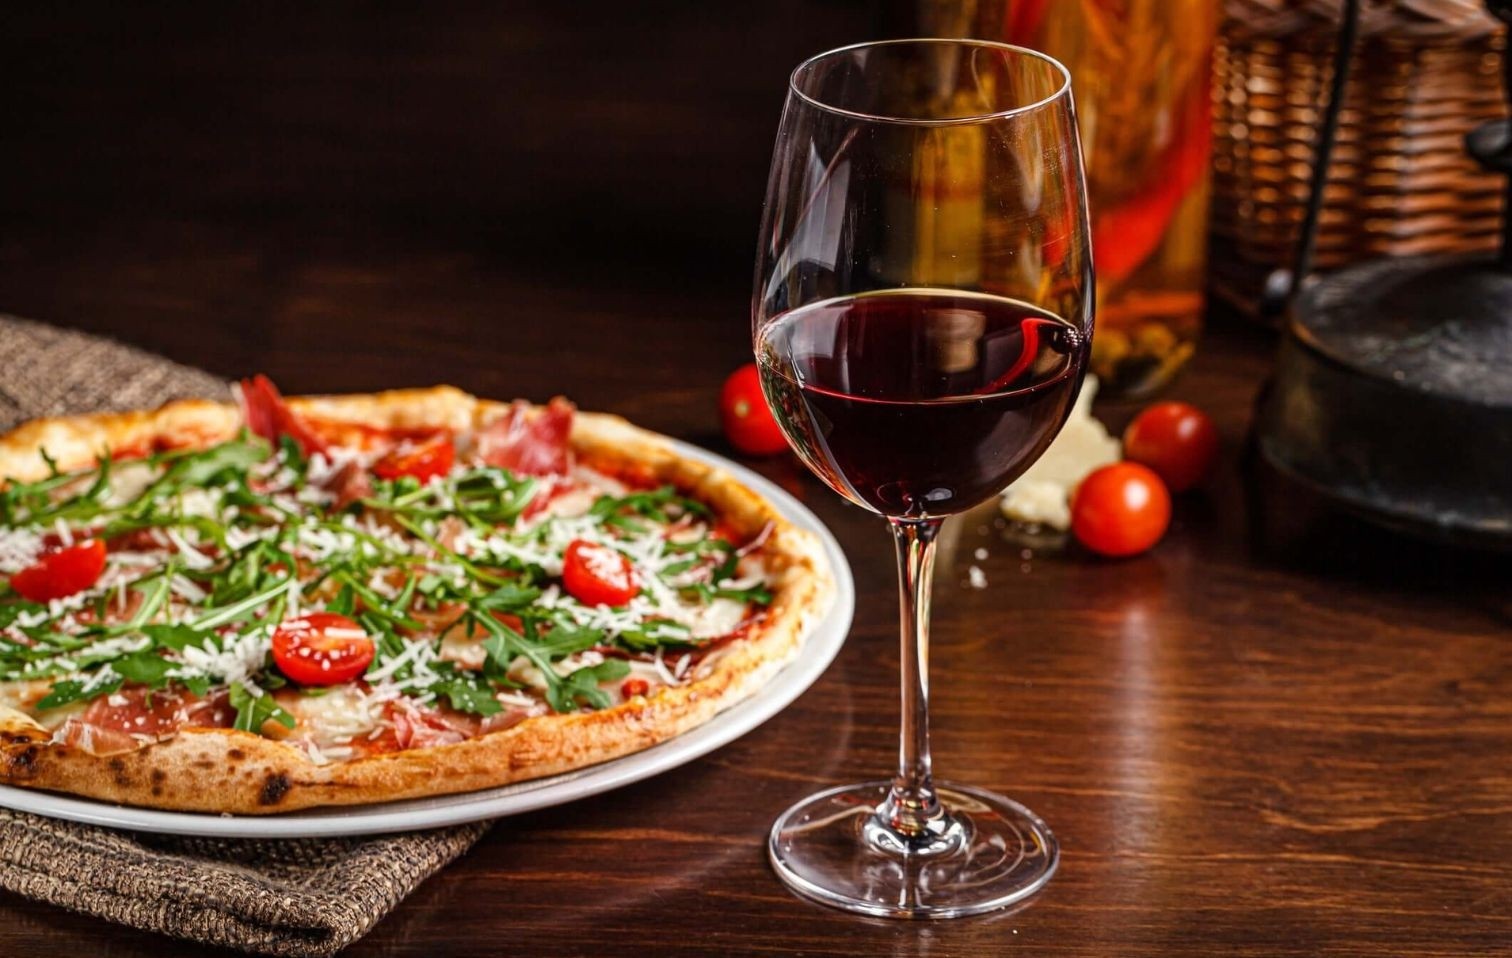 copertina pairing pizza e vino rosso